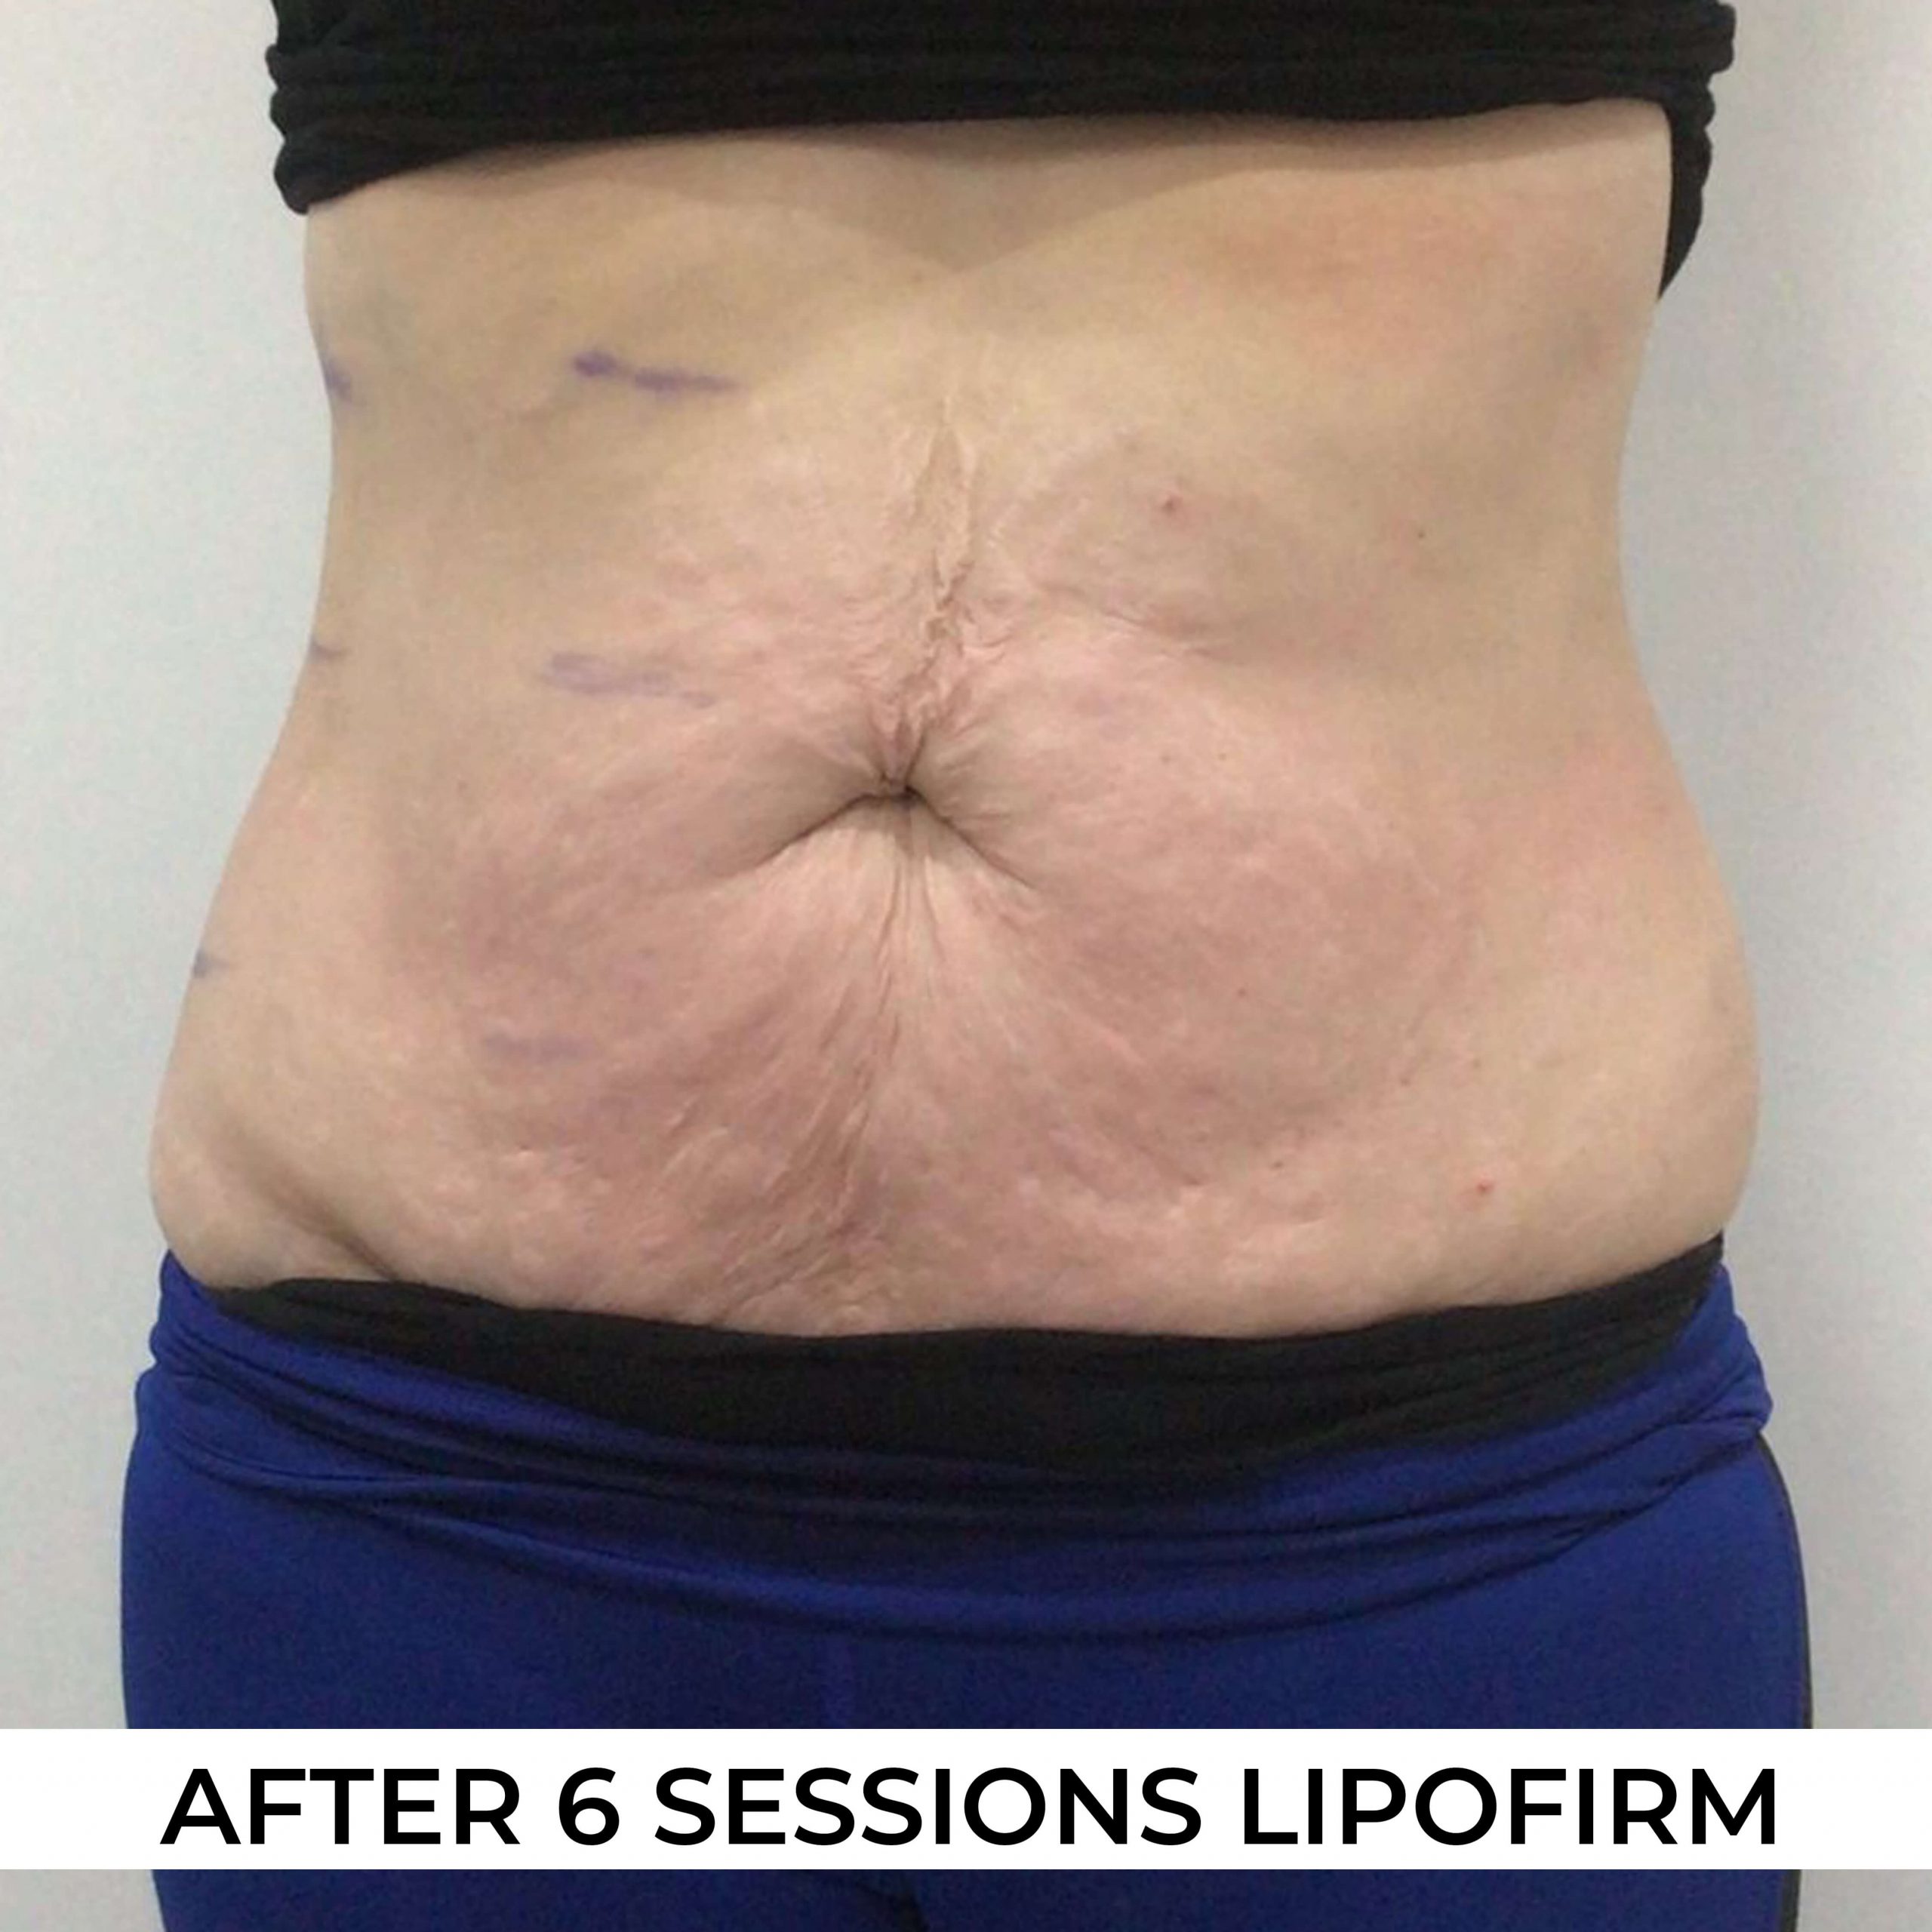 after image of Lipofirm procedure